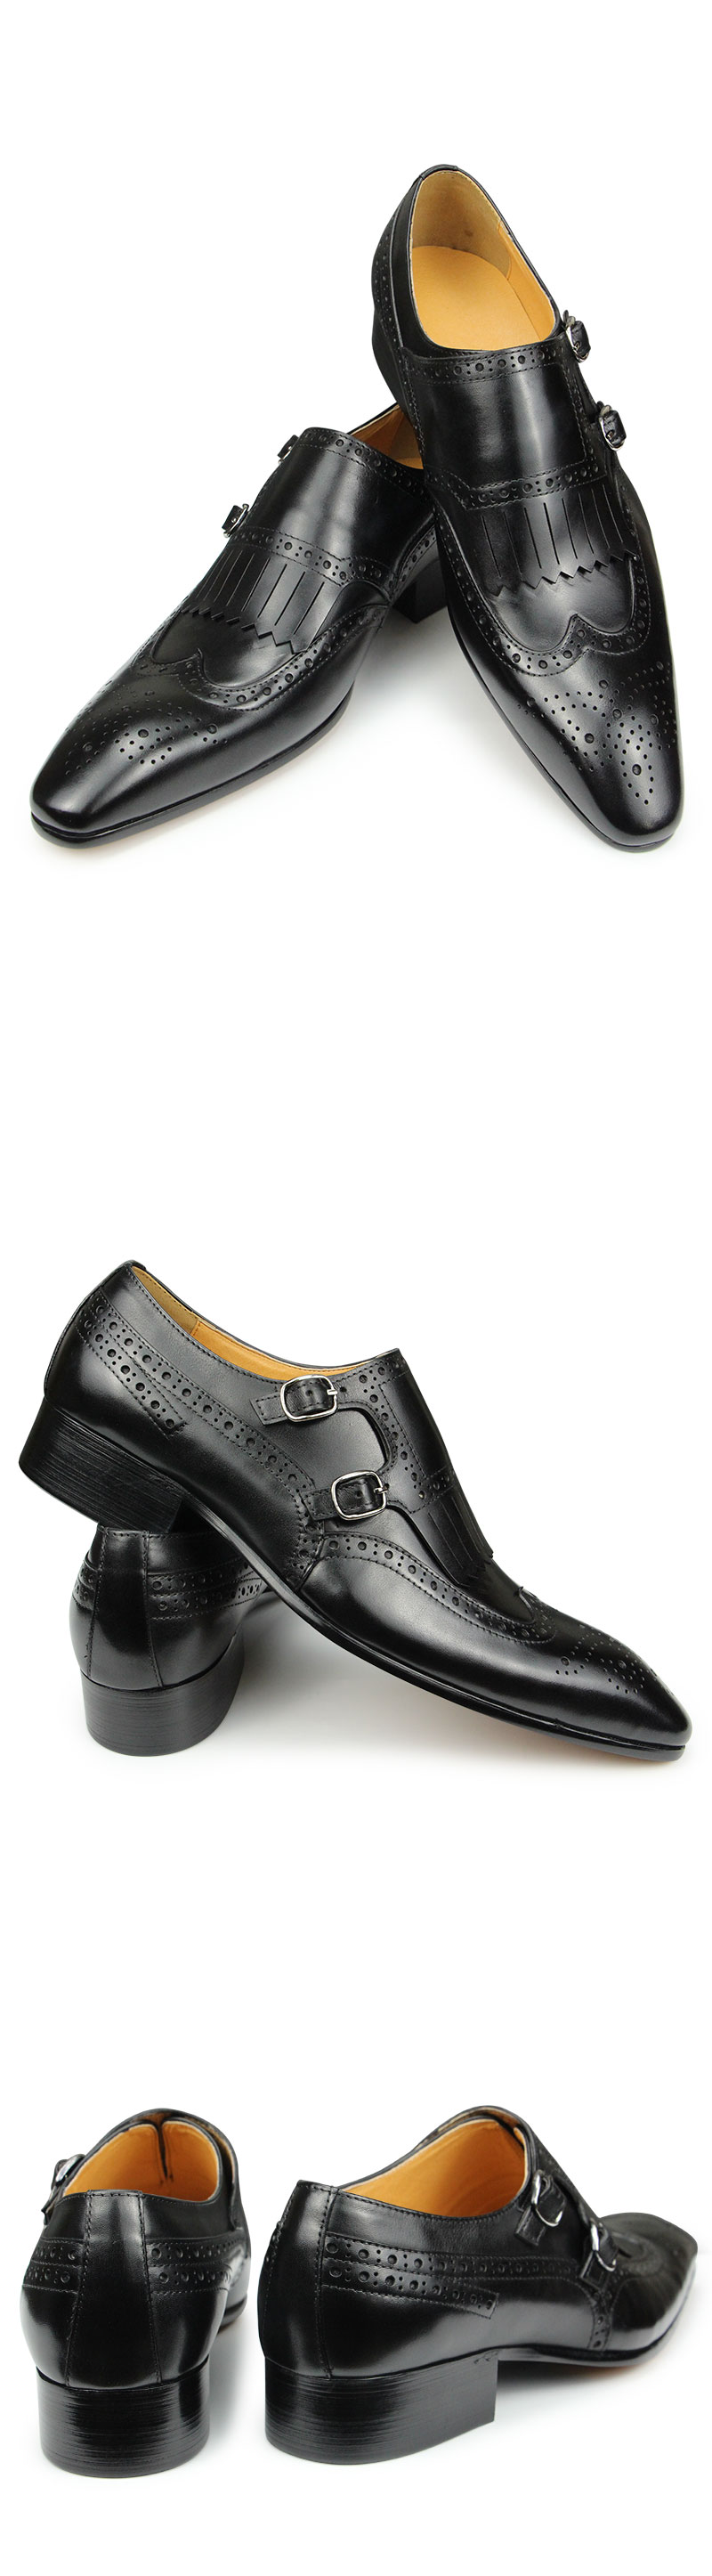 come4buy.com-Luxury Men's Cowhide Black Wedding Party Shoes